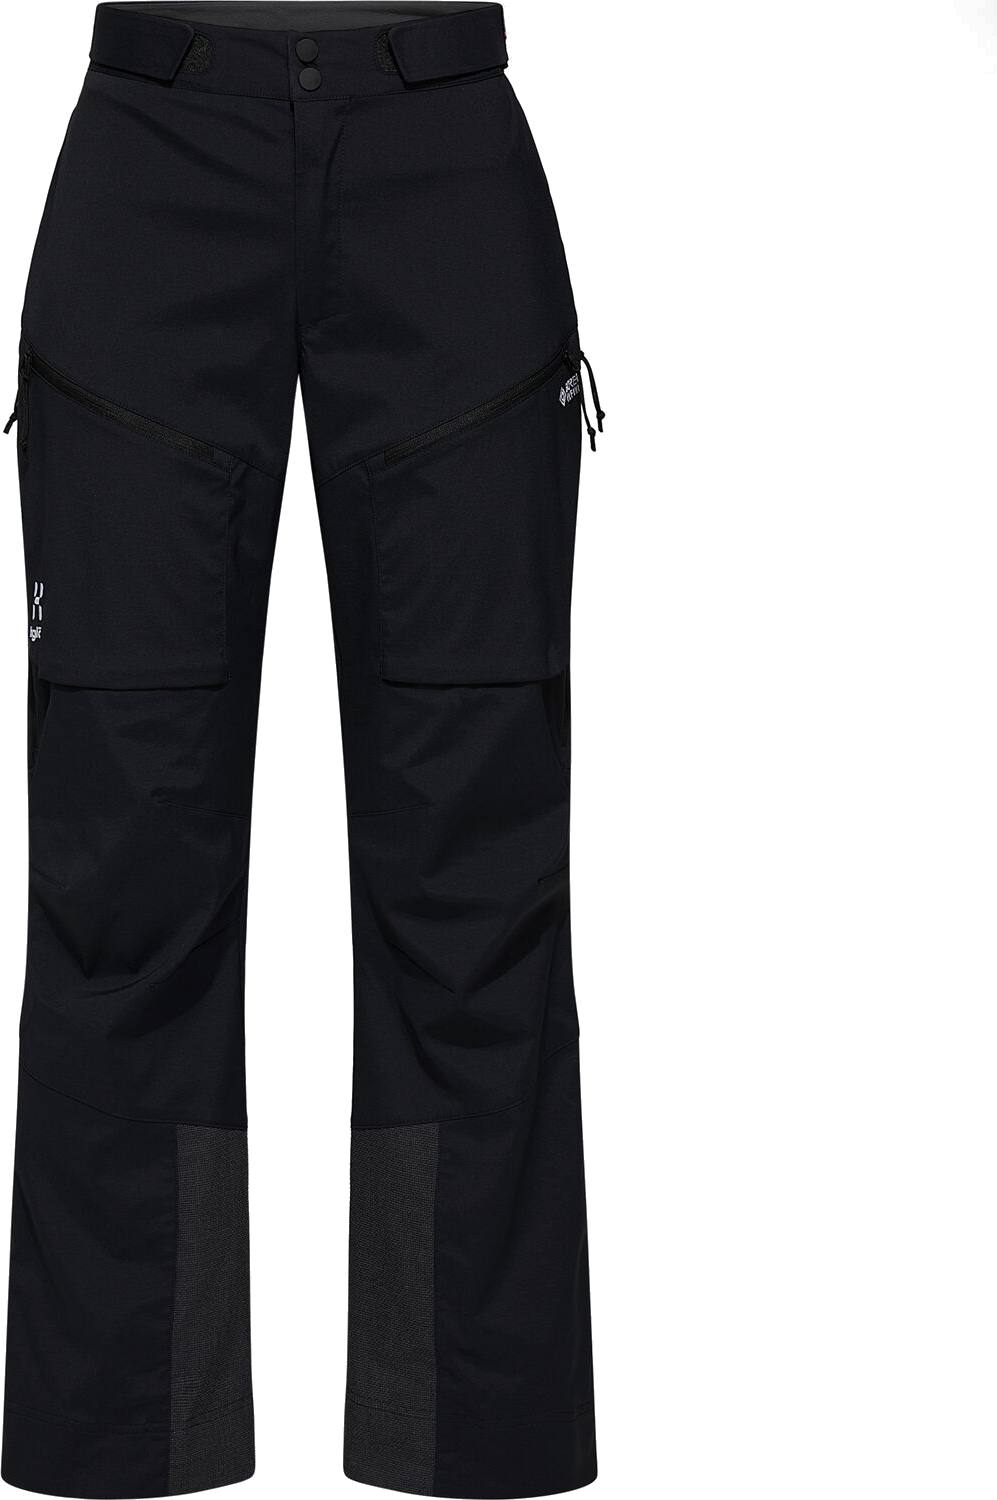 Brunotti Ski Trousers Snowboard Trousers Winter Pants White Nevada Clo ® Insulation 